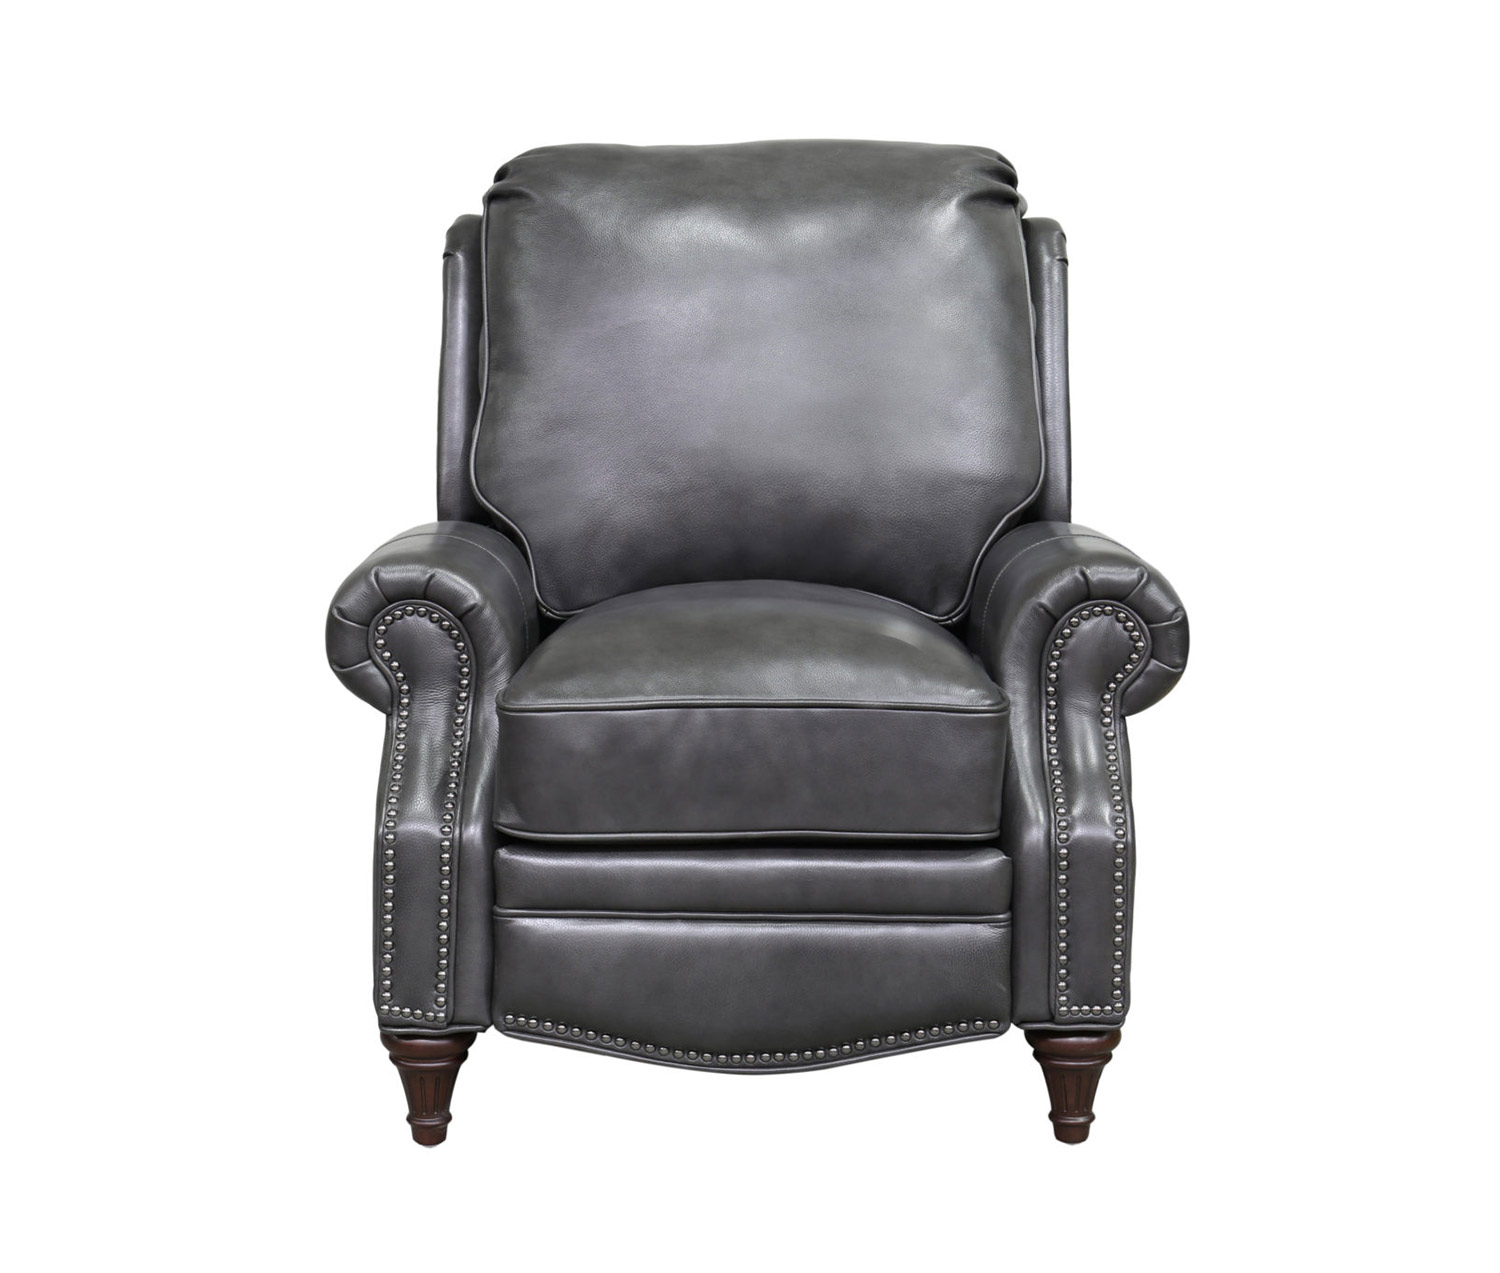 Barcalounger Avery Recliner Chair - Wrenn Gray/all leather